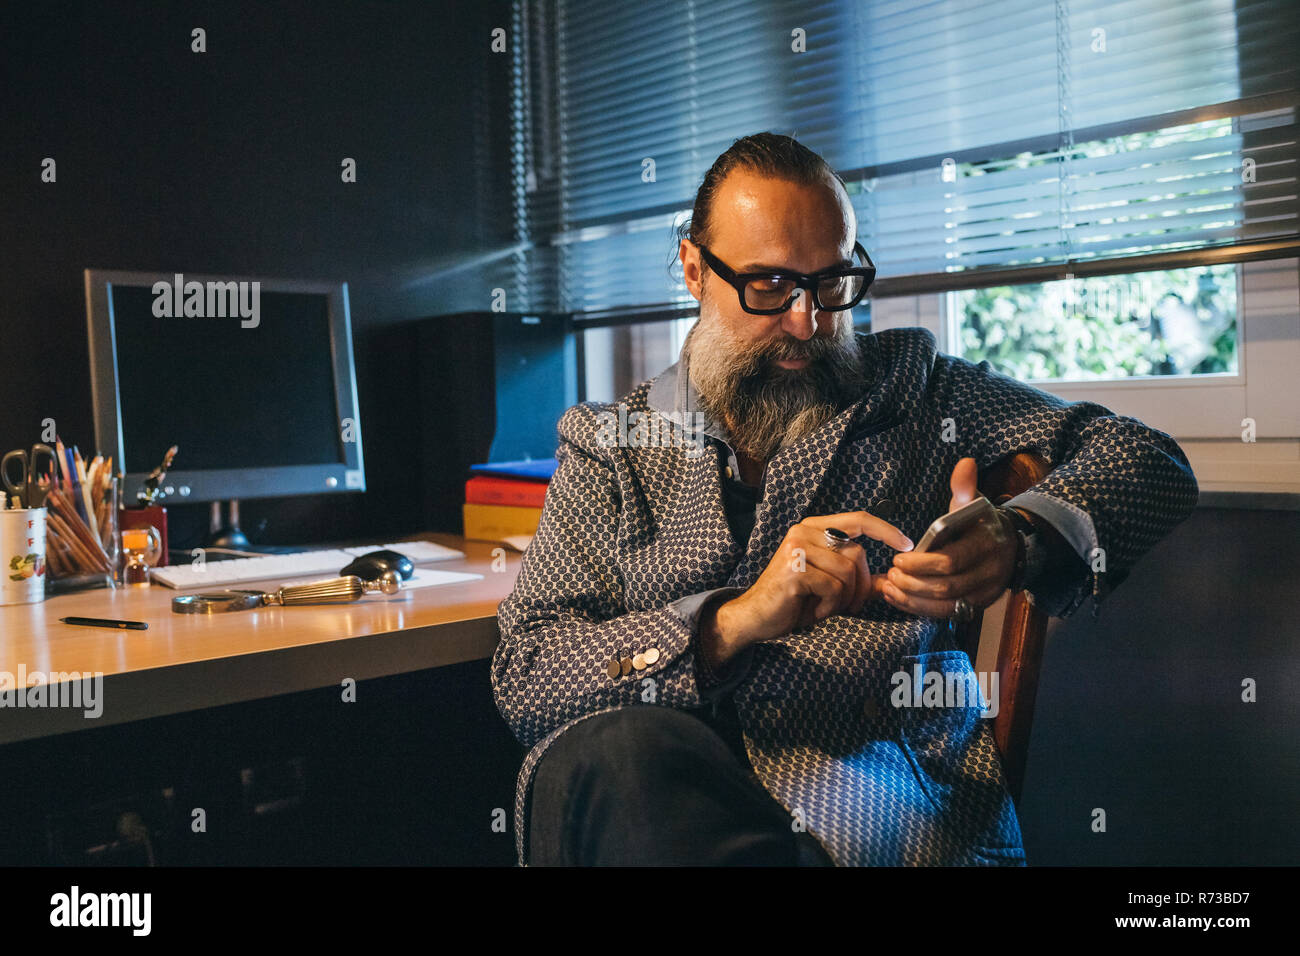 Man using cellphone at desk Stock Photo